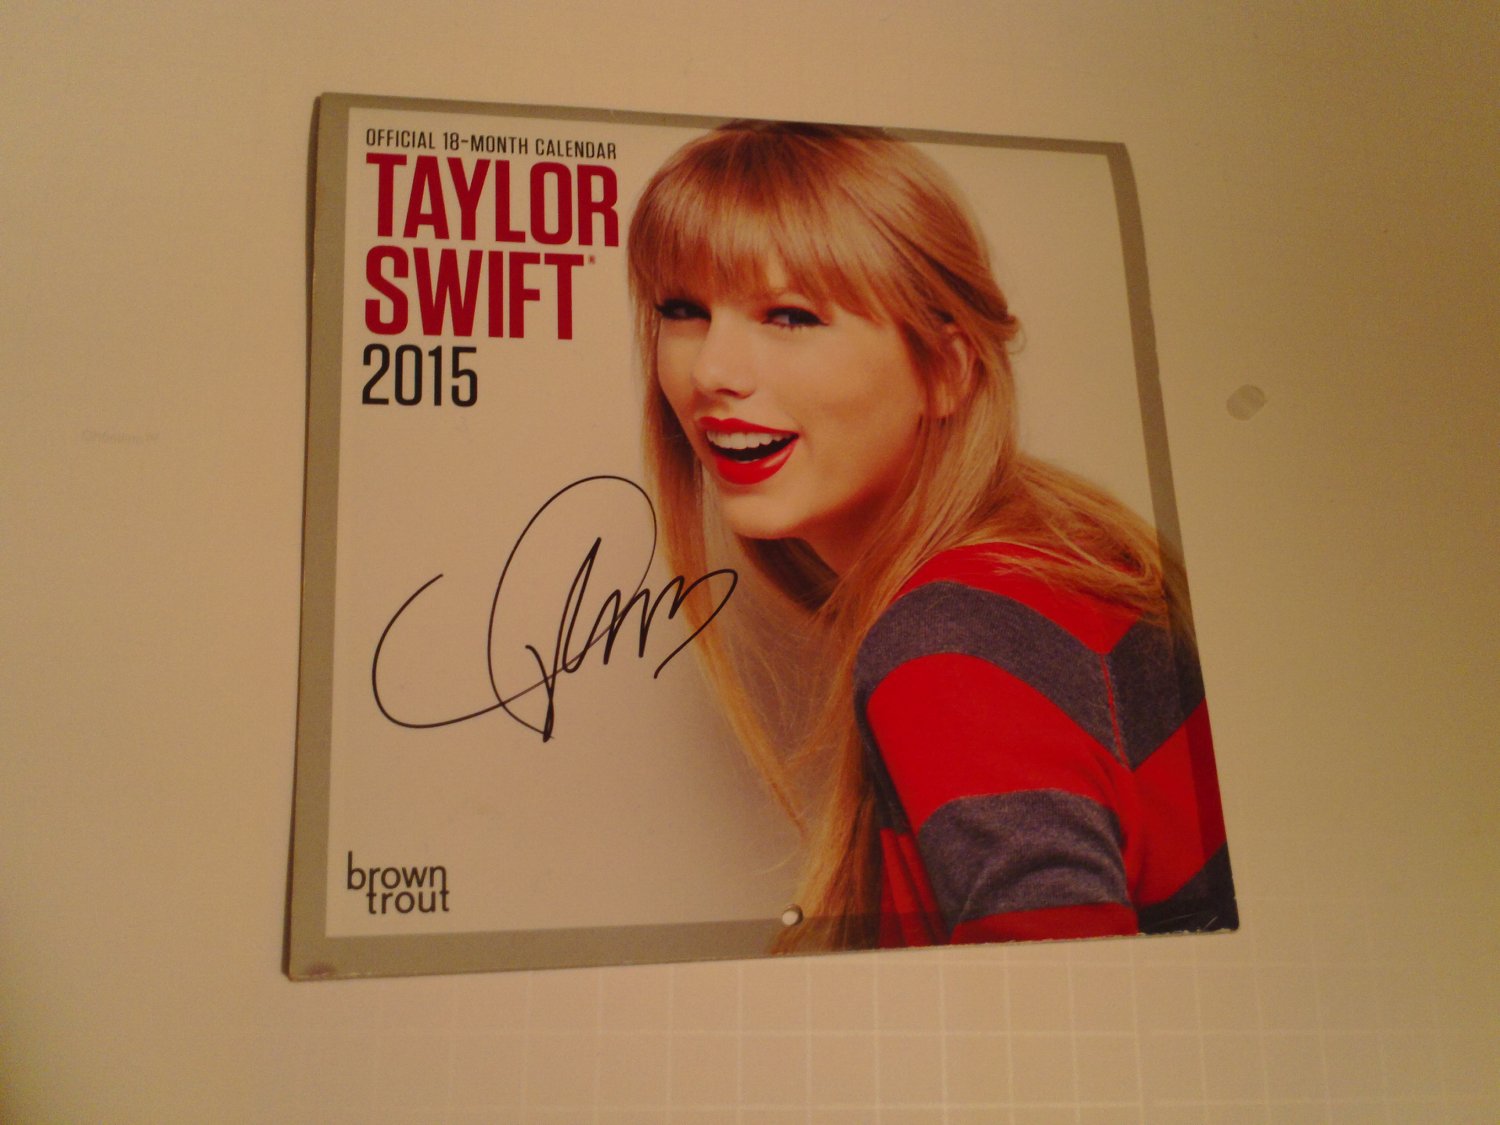 Taylor Swift signed Calendar